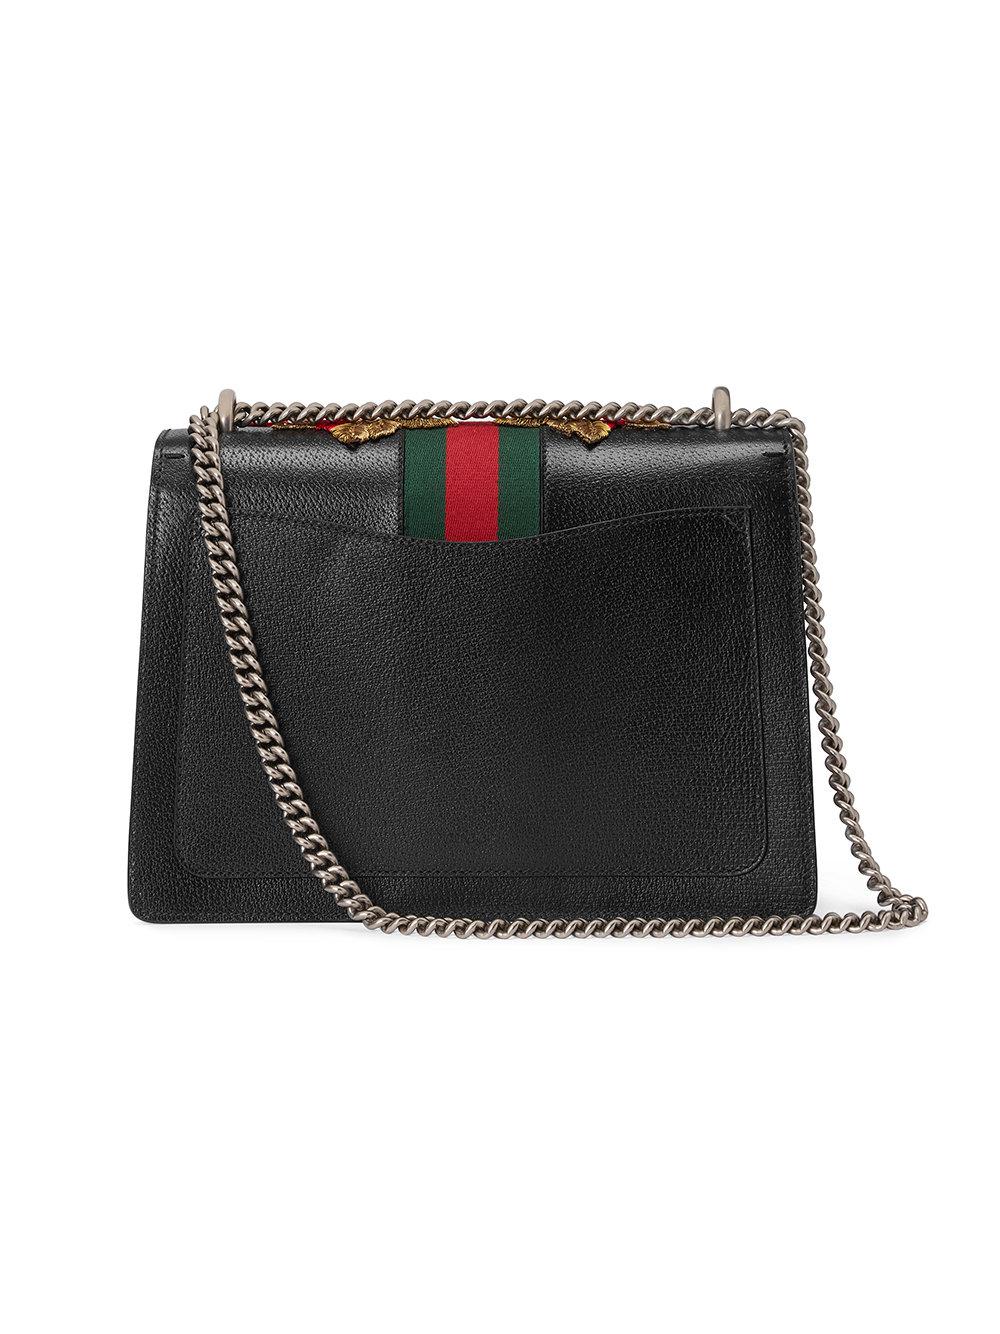 Gucci Dionysus Leather Shoulder Bag in Black - Lyst